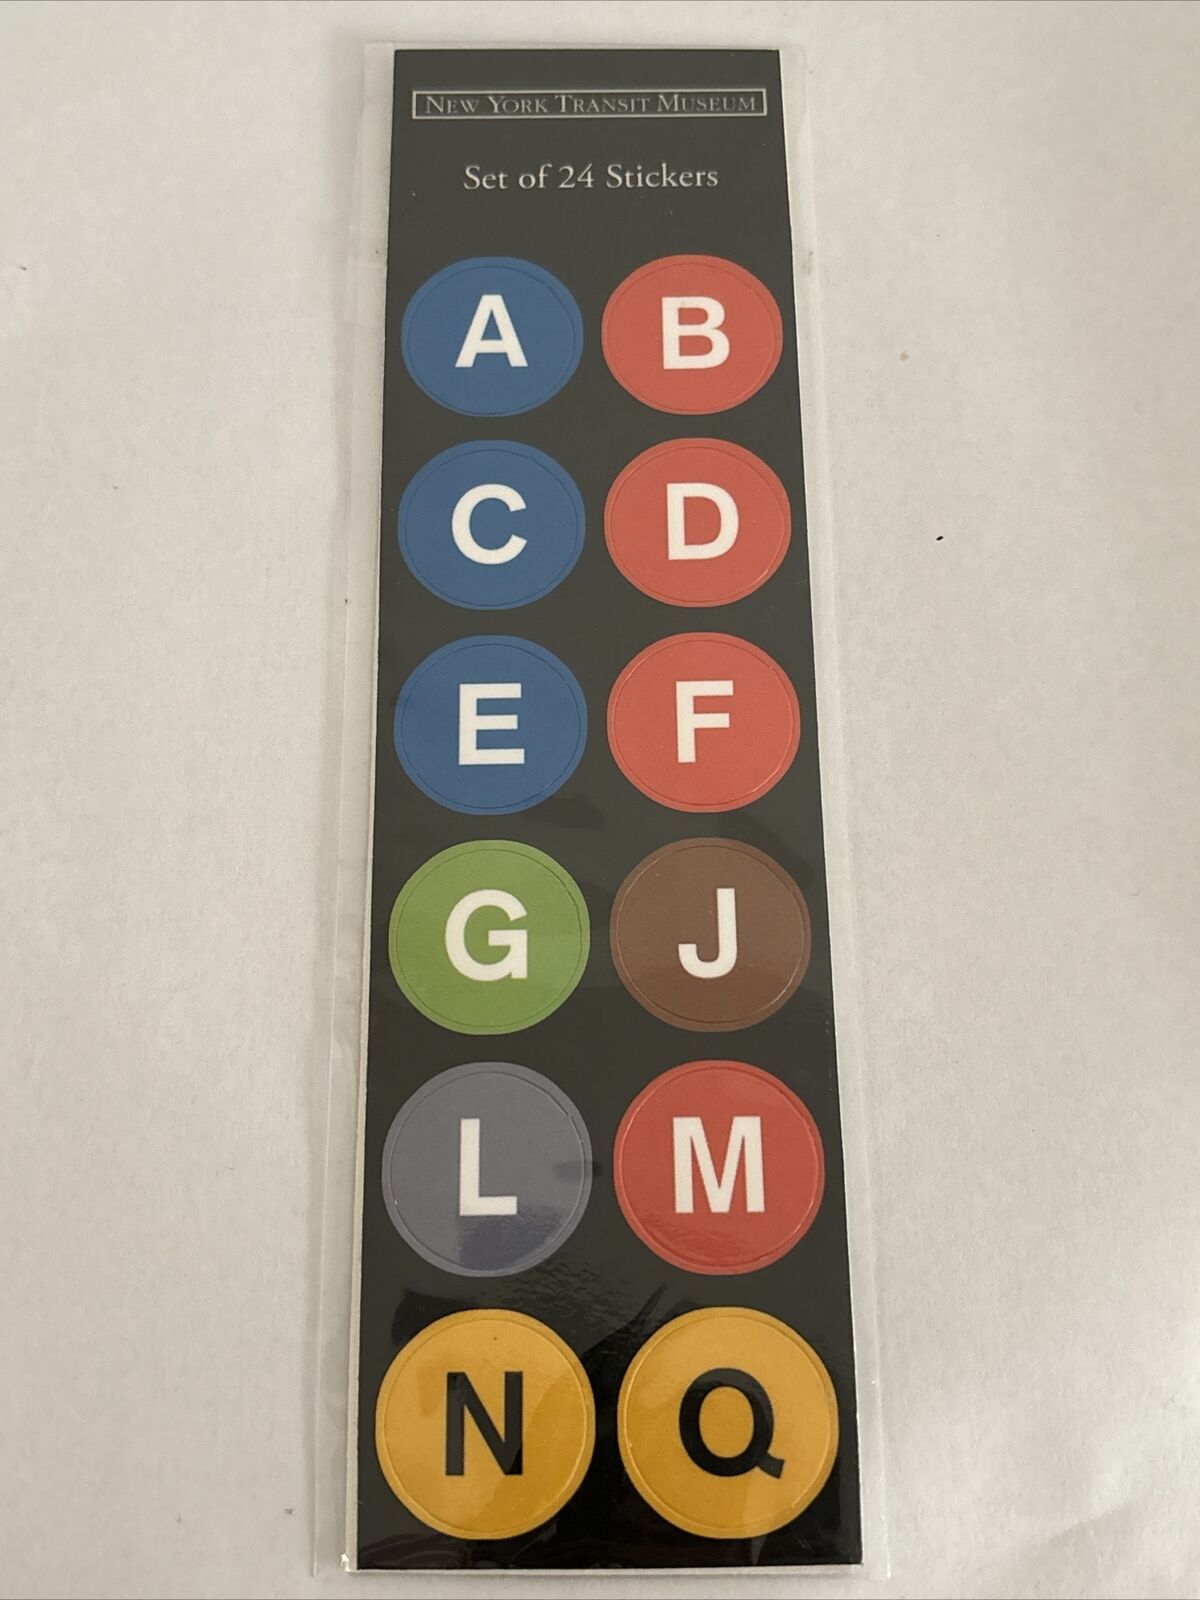 Nyc Subway Mta Set Of 24 Stickers 